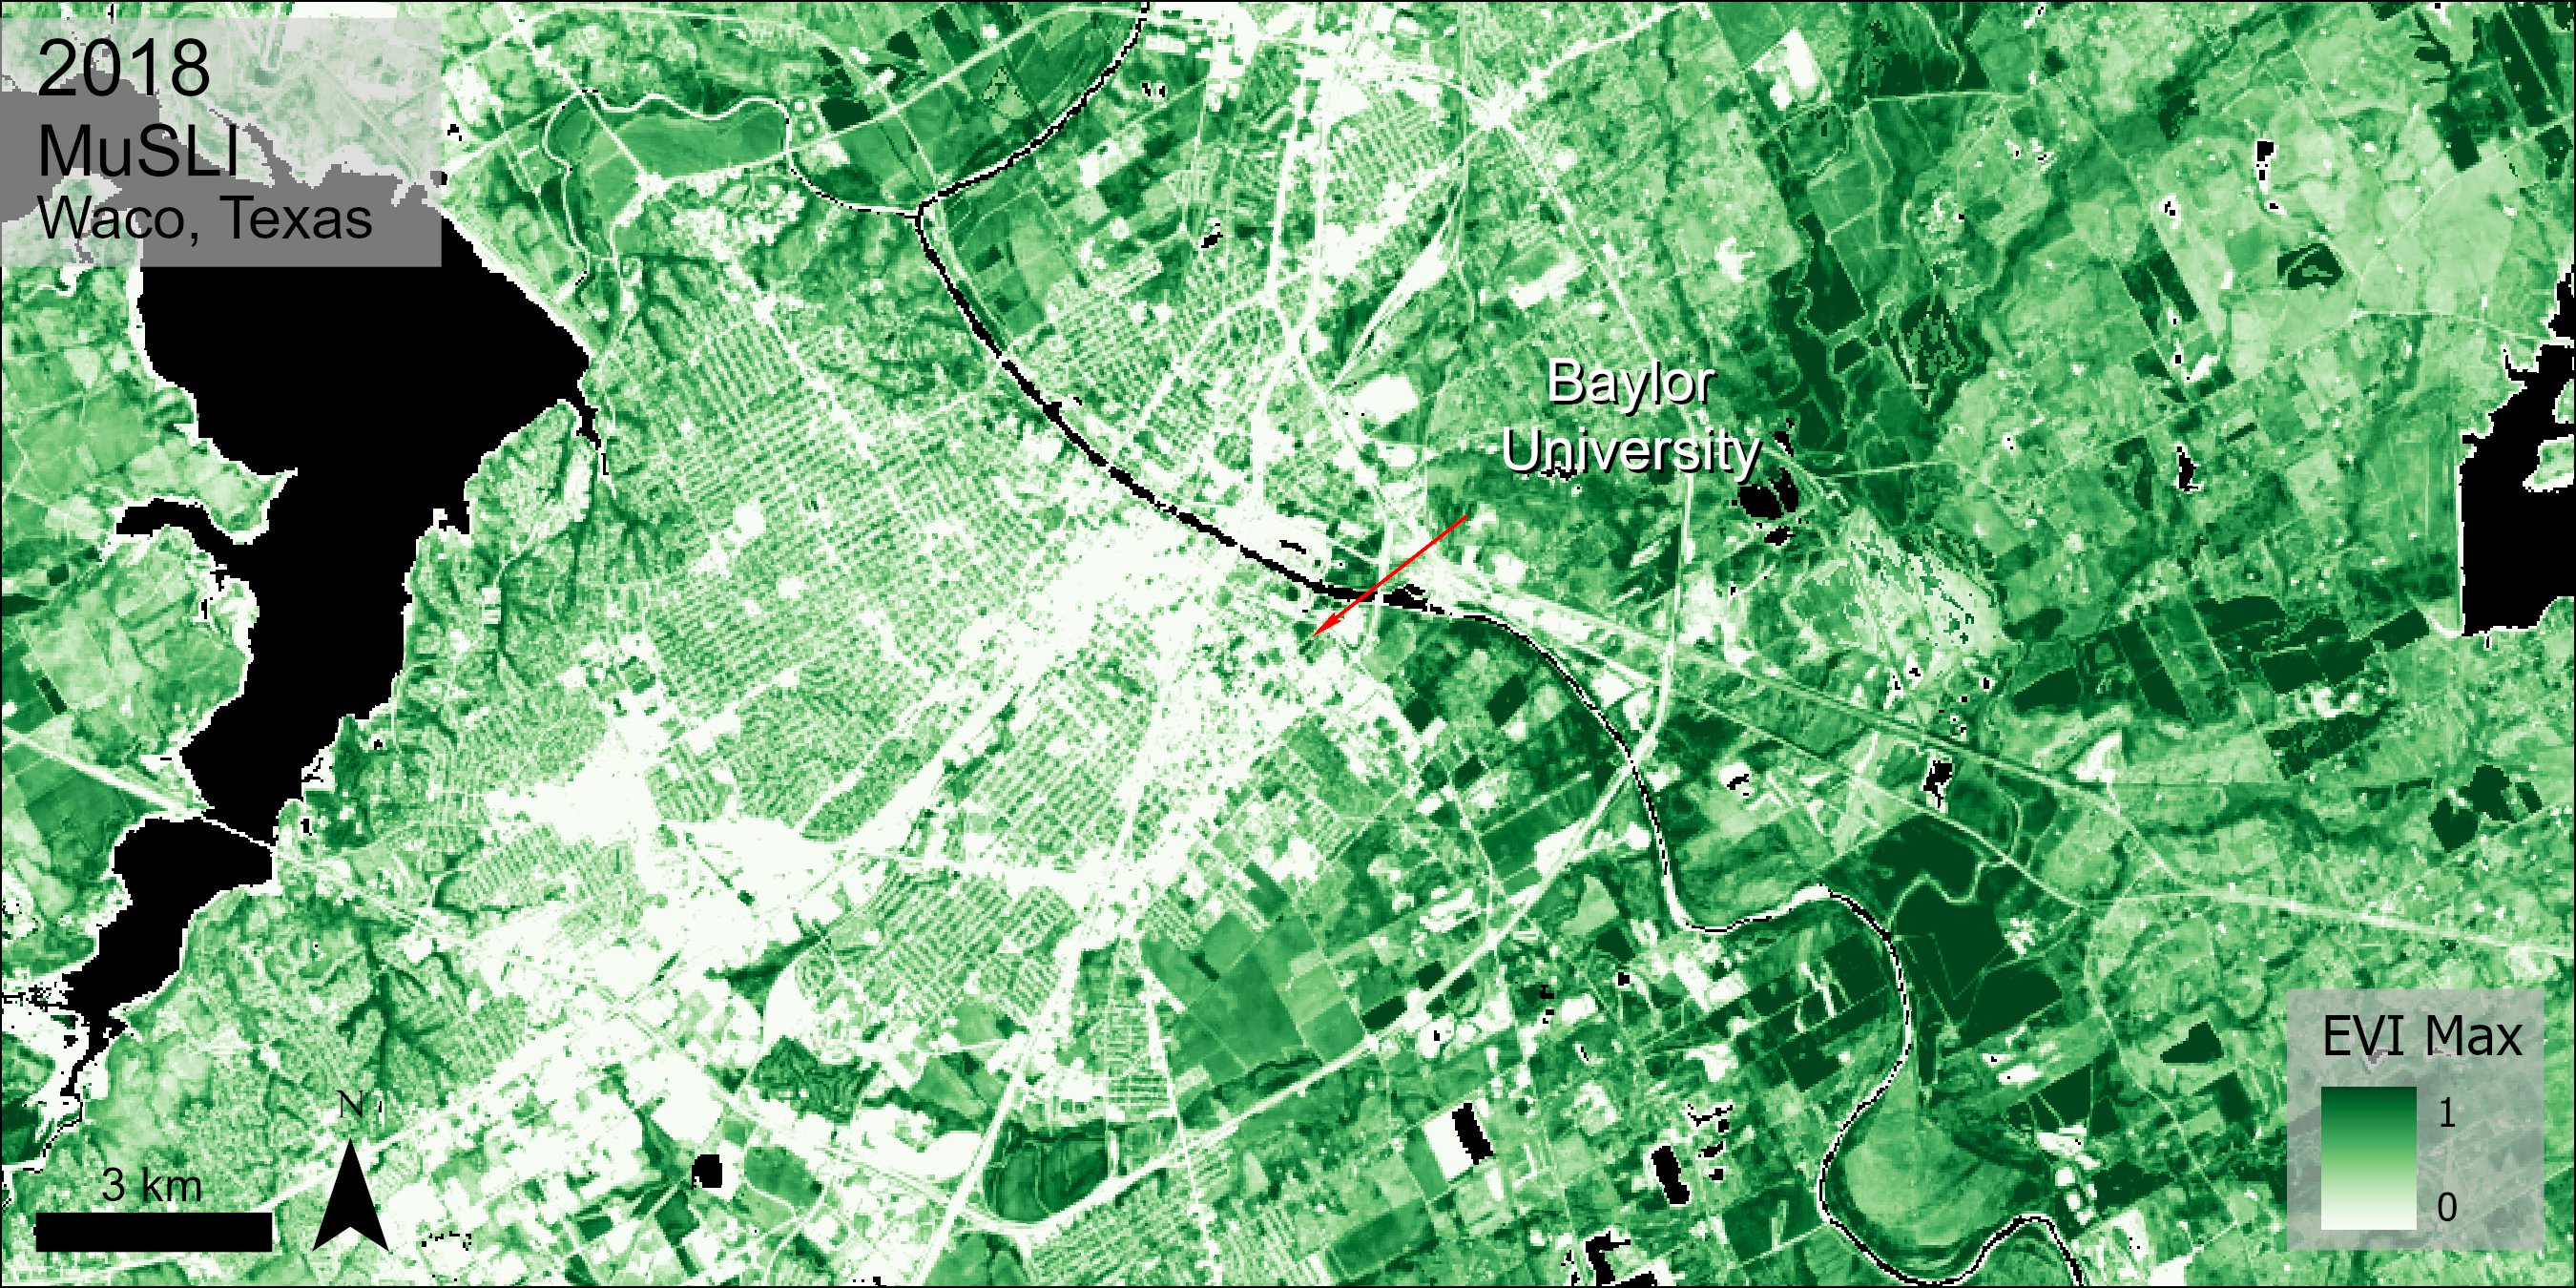 MuSLI EVI Max data over Waco, Texas.